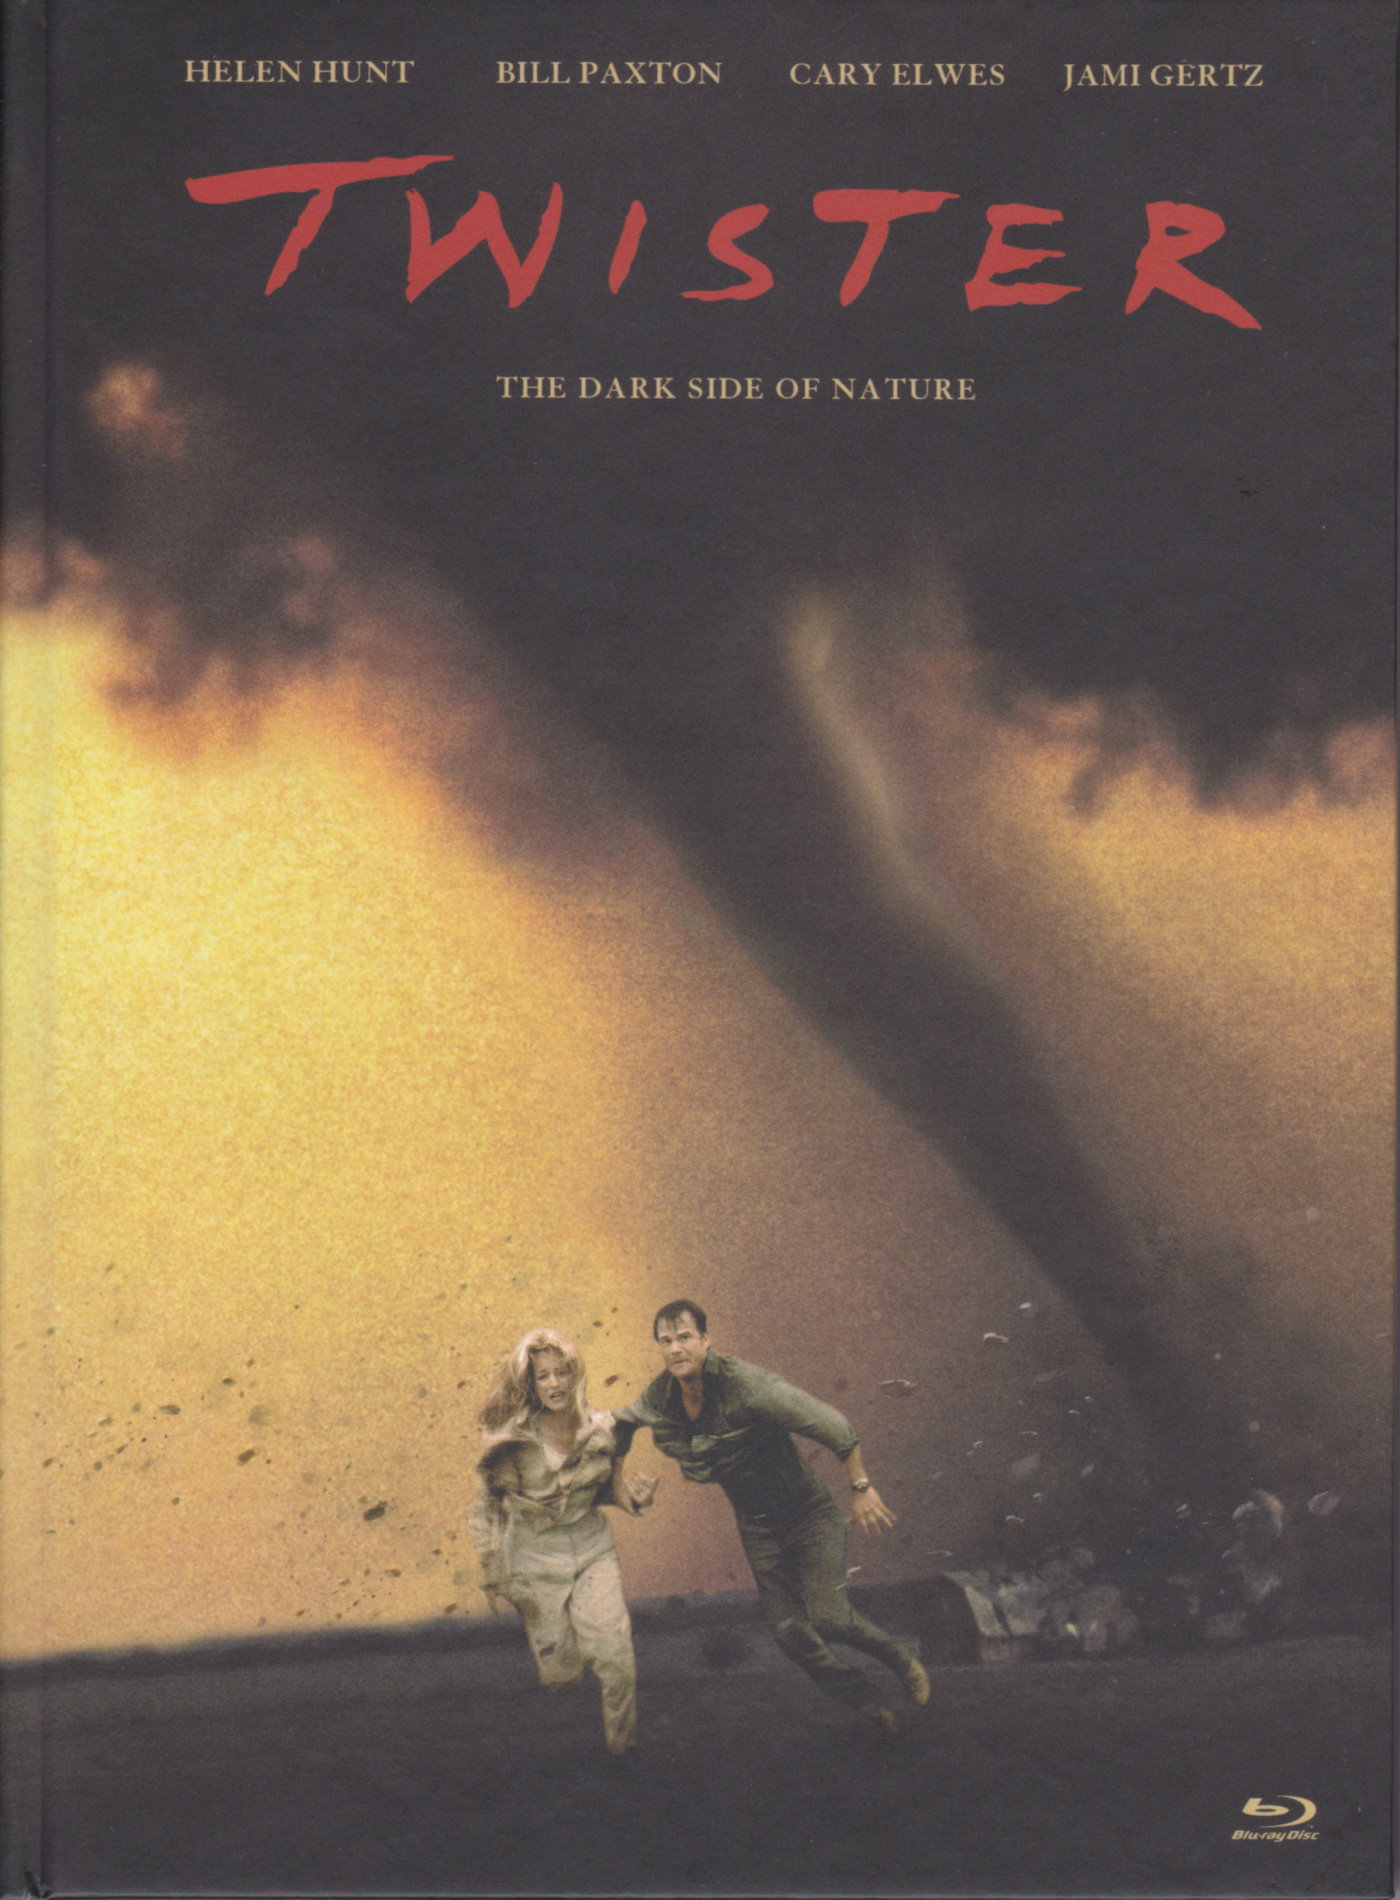 Cover - Twister.jpg